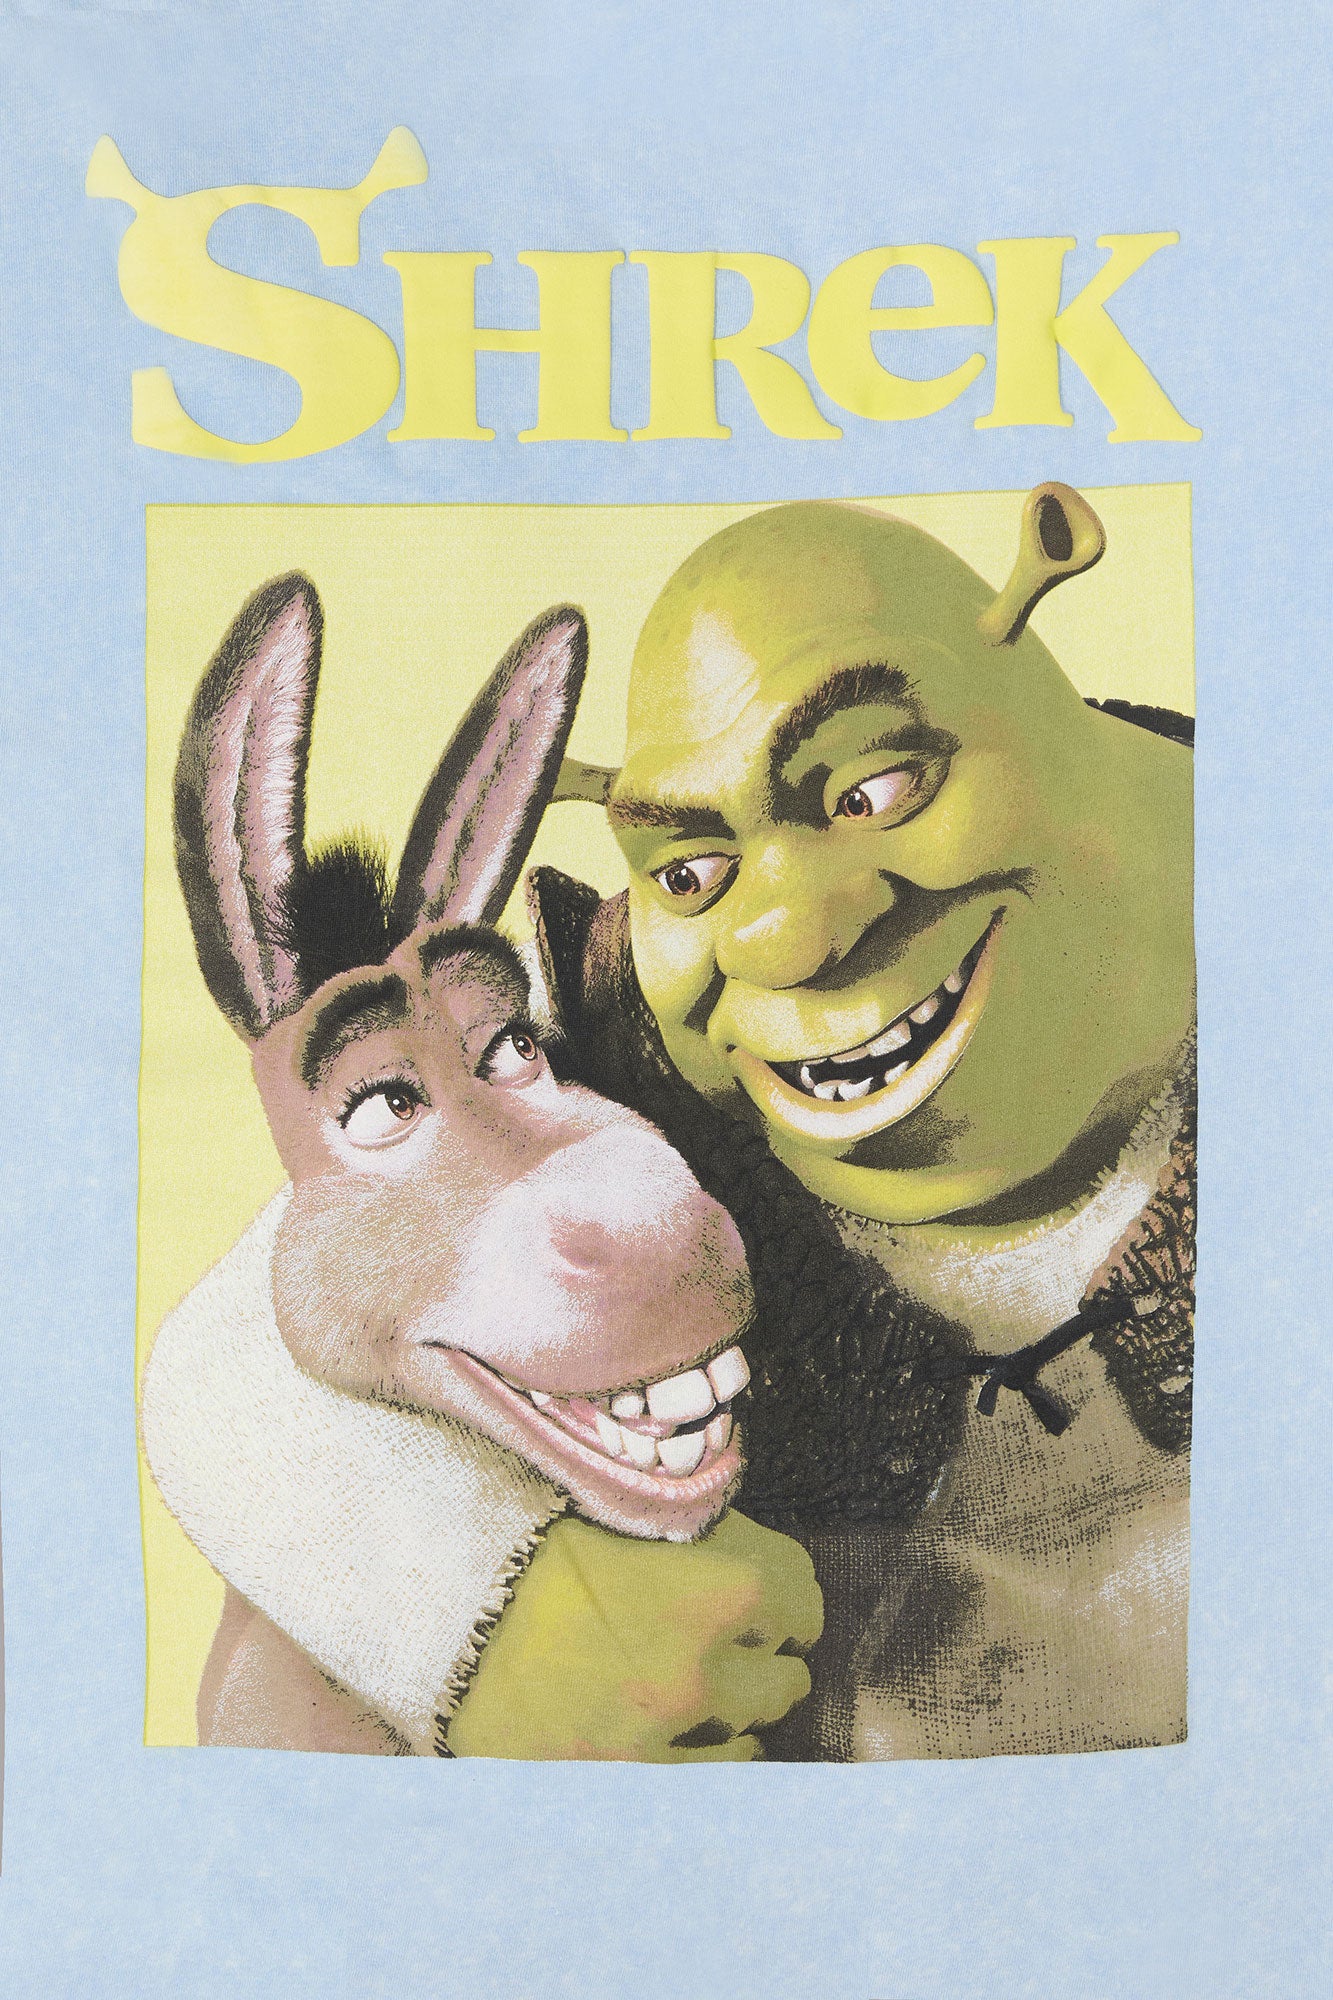 Shrek Graphic Boyfriend T-Shirt